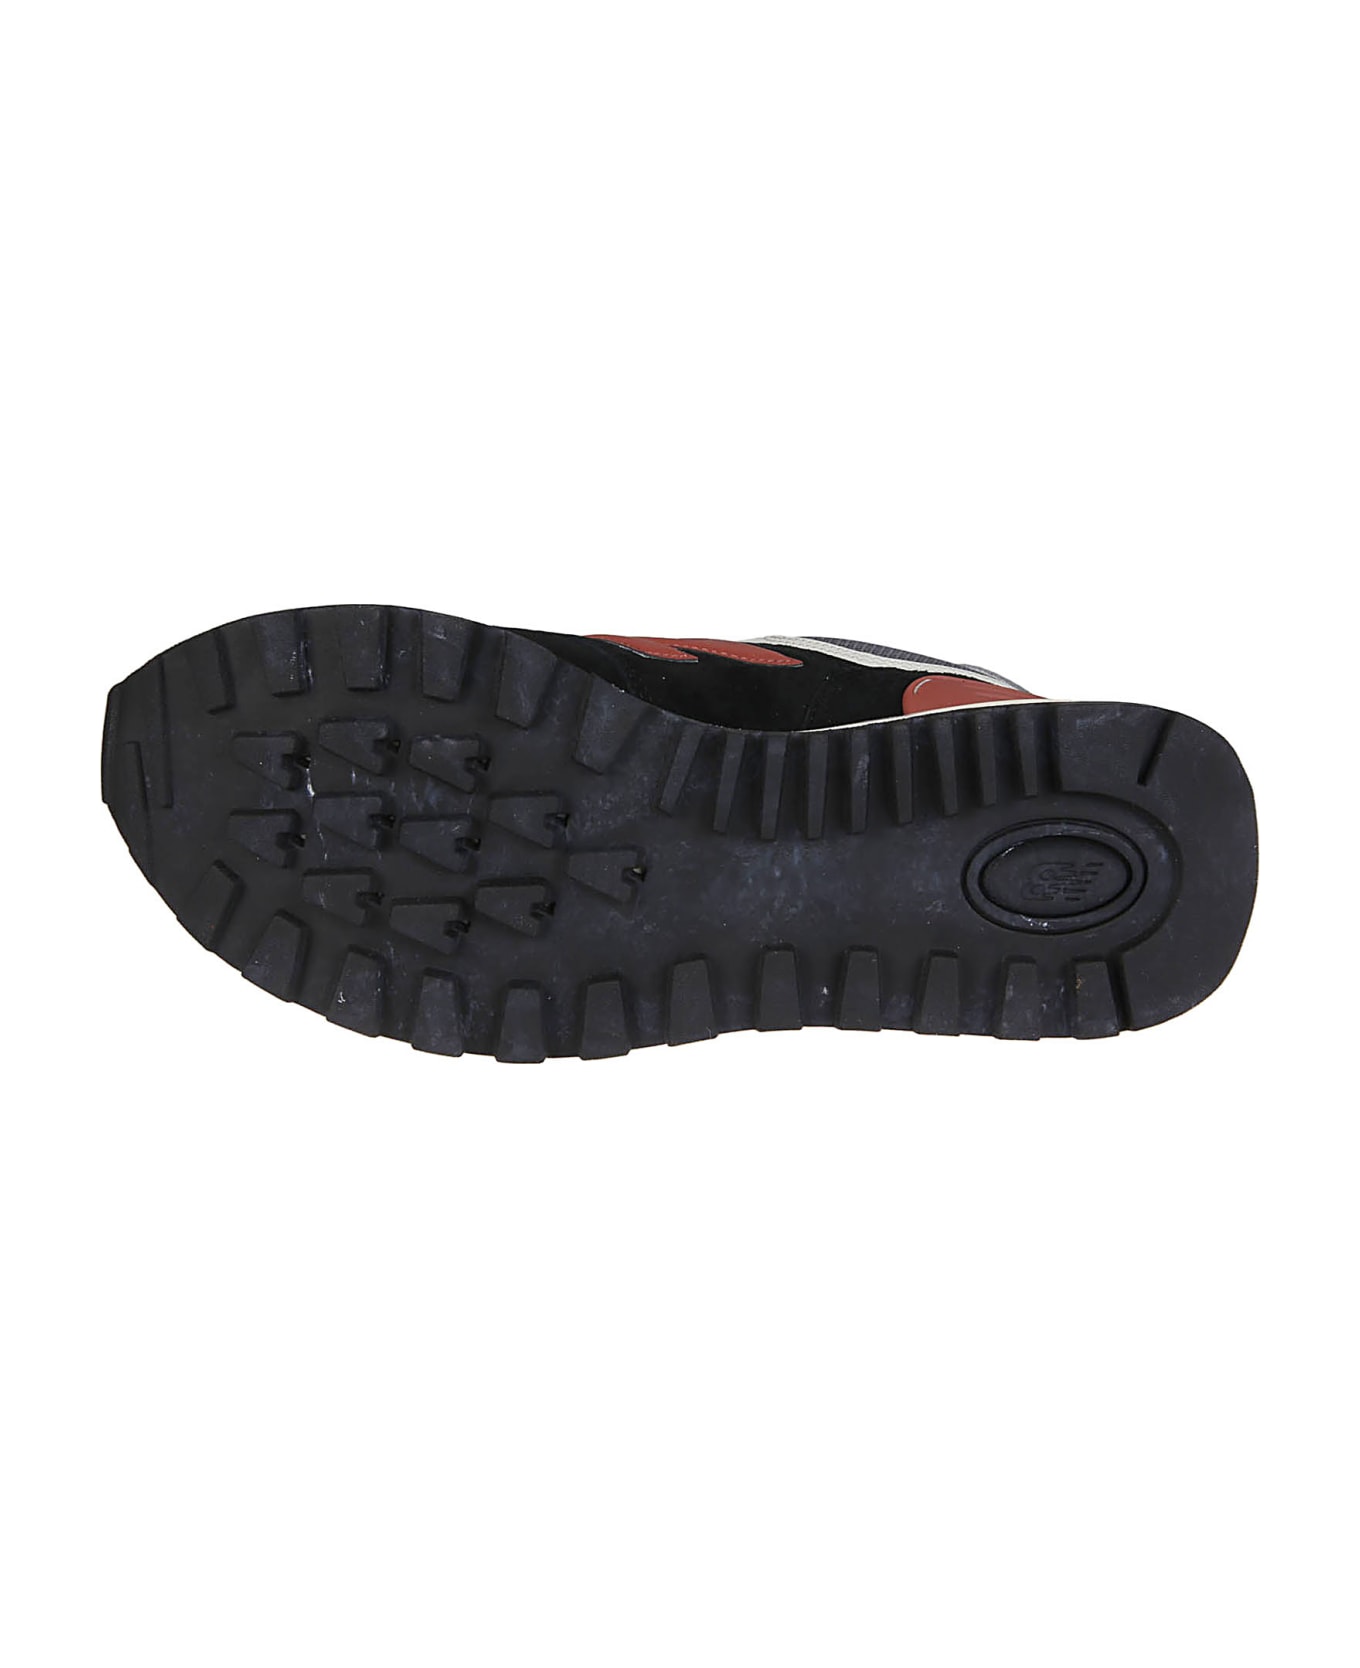 New Balance 574 Sneakers - Black